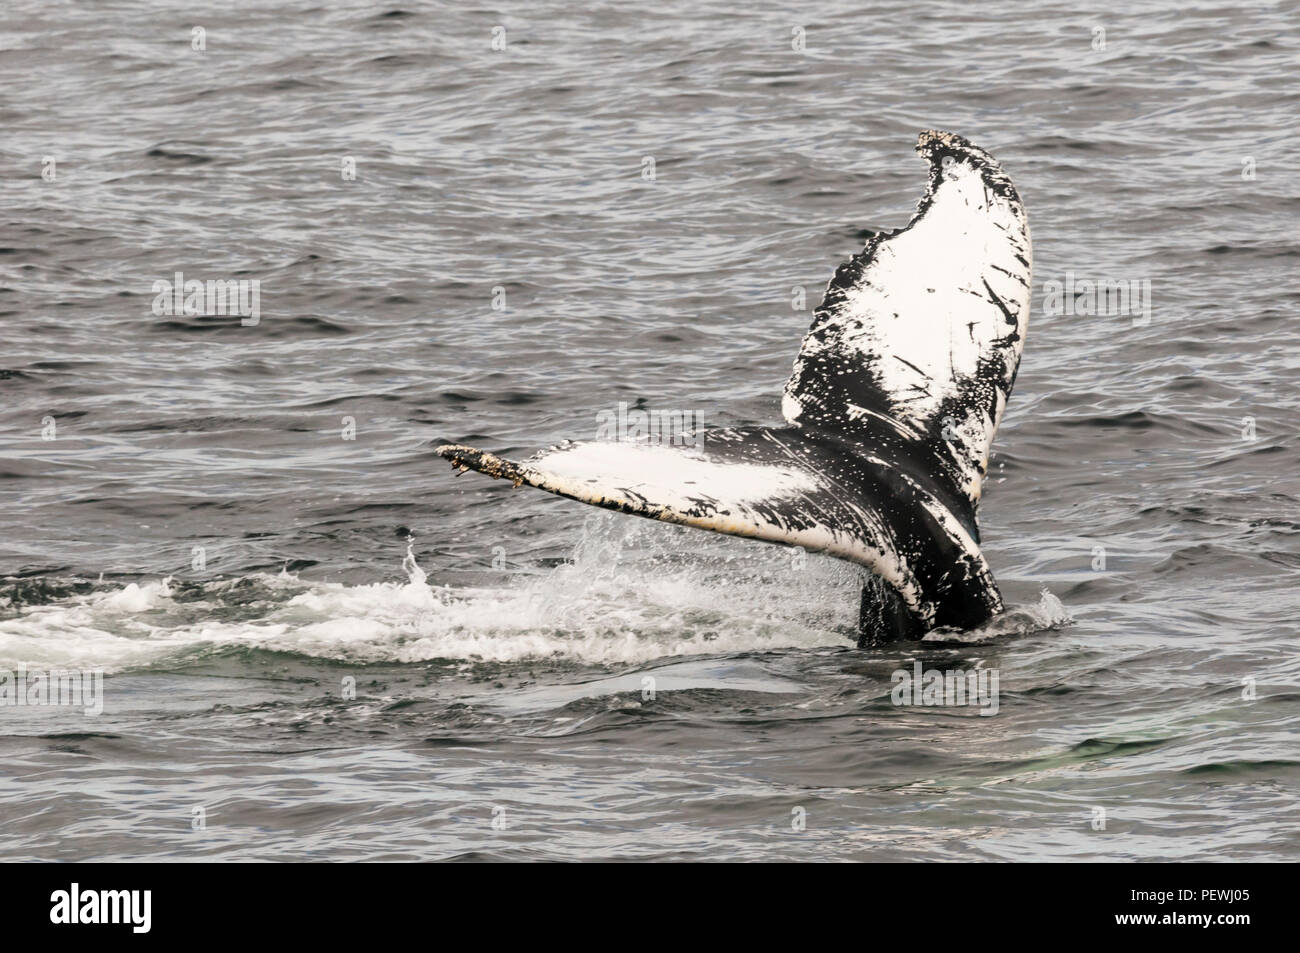 La ballena jorobada, Megaptera novaeangliae, frente a las costas de Terranova, Canadá. Foto de stock